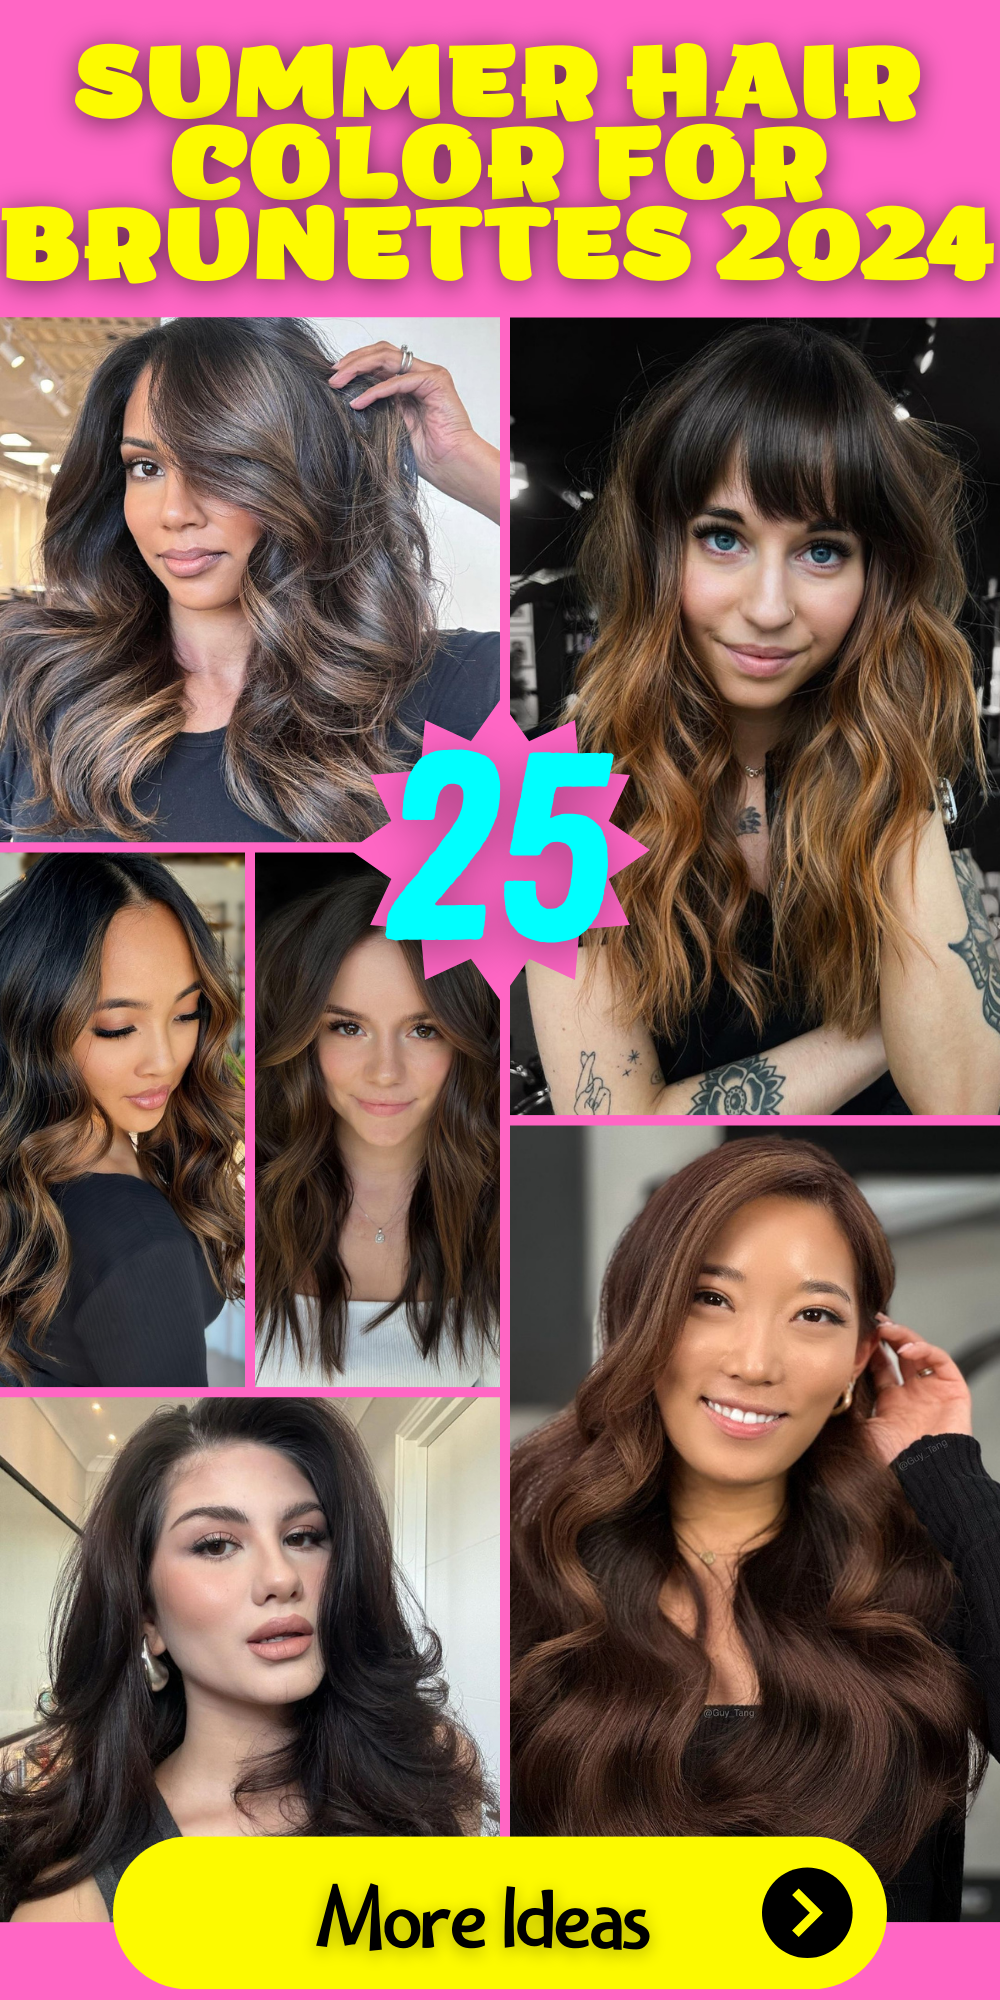 Brunettes' Beauty: Summer Hair Color Trends 2024